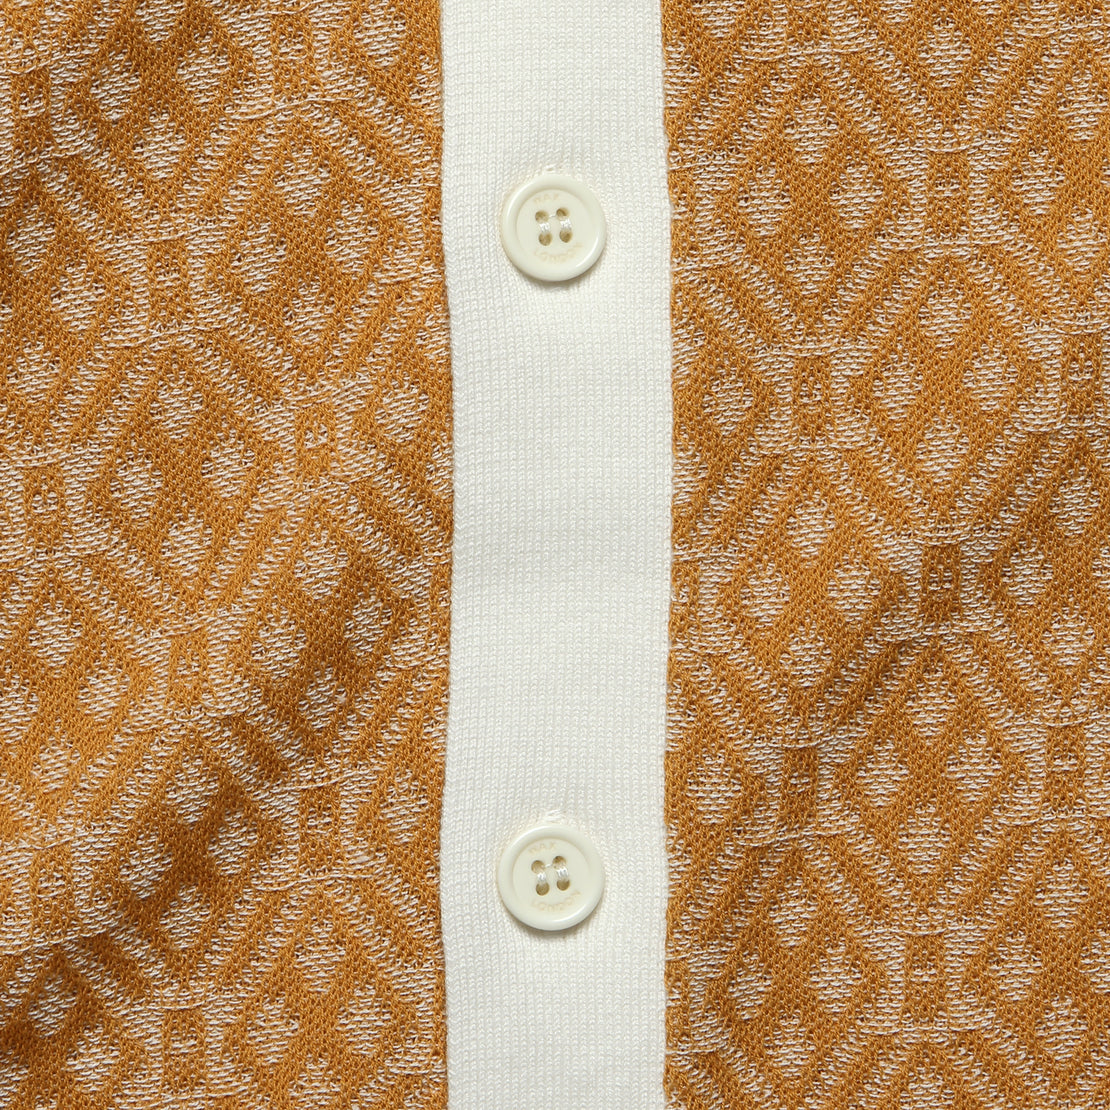 Tellaro Shirt - Tile Knit Mustard - Wax London - STAG Provisions - Tops - S/S Knit